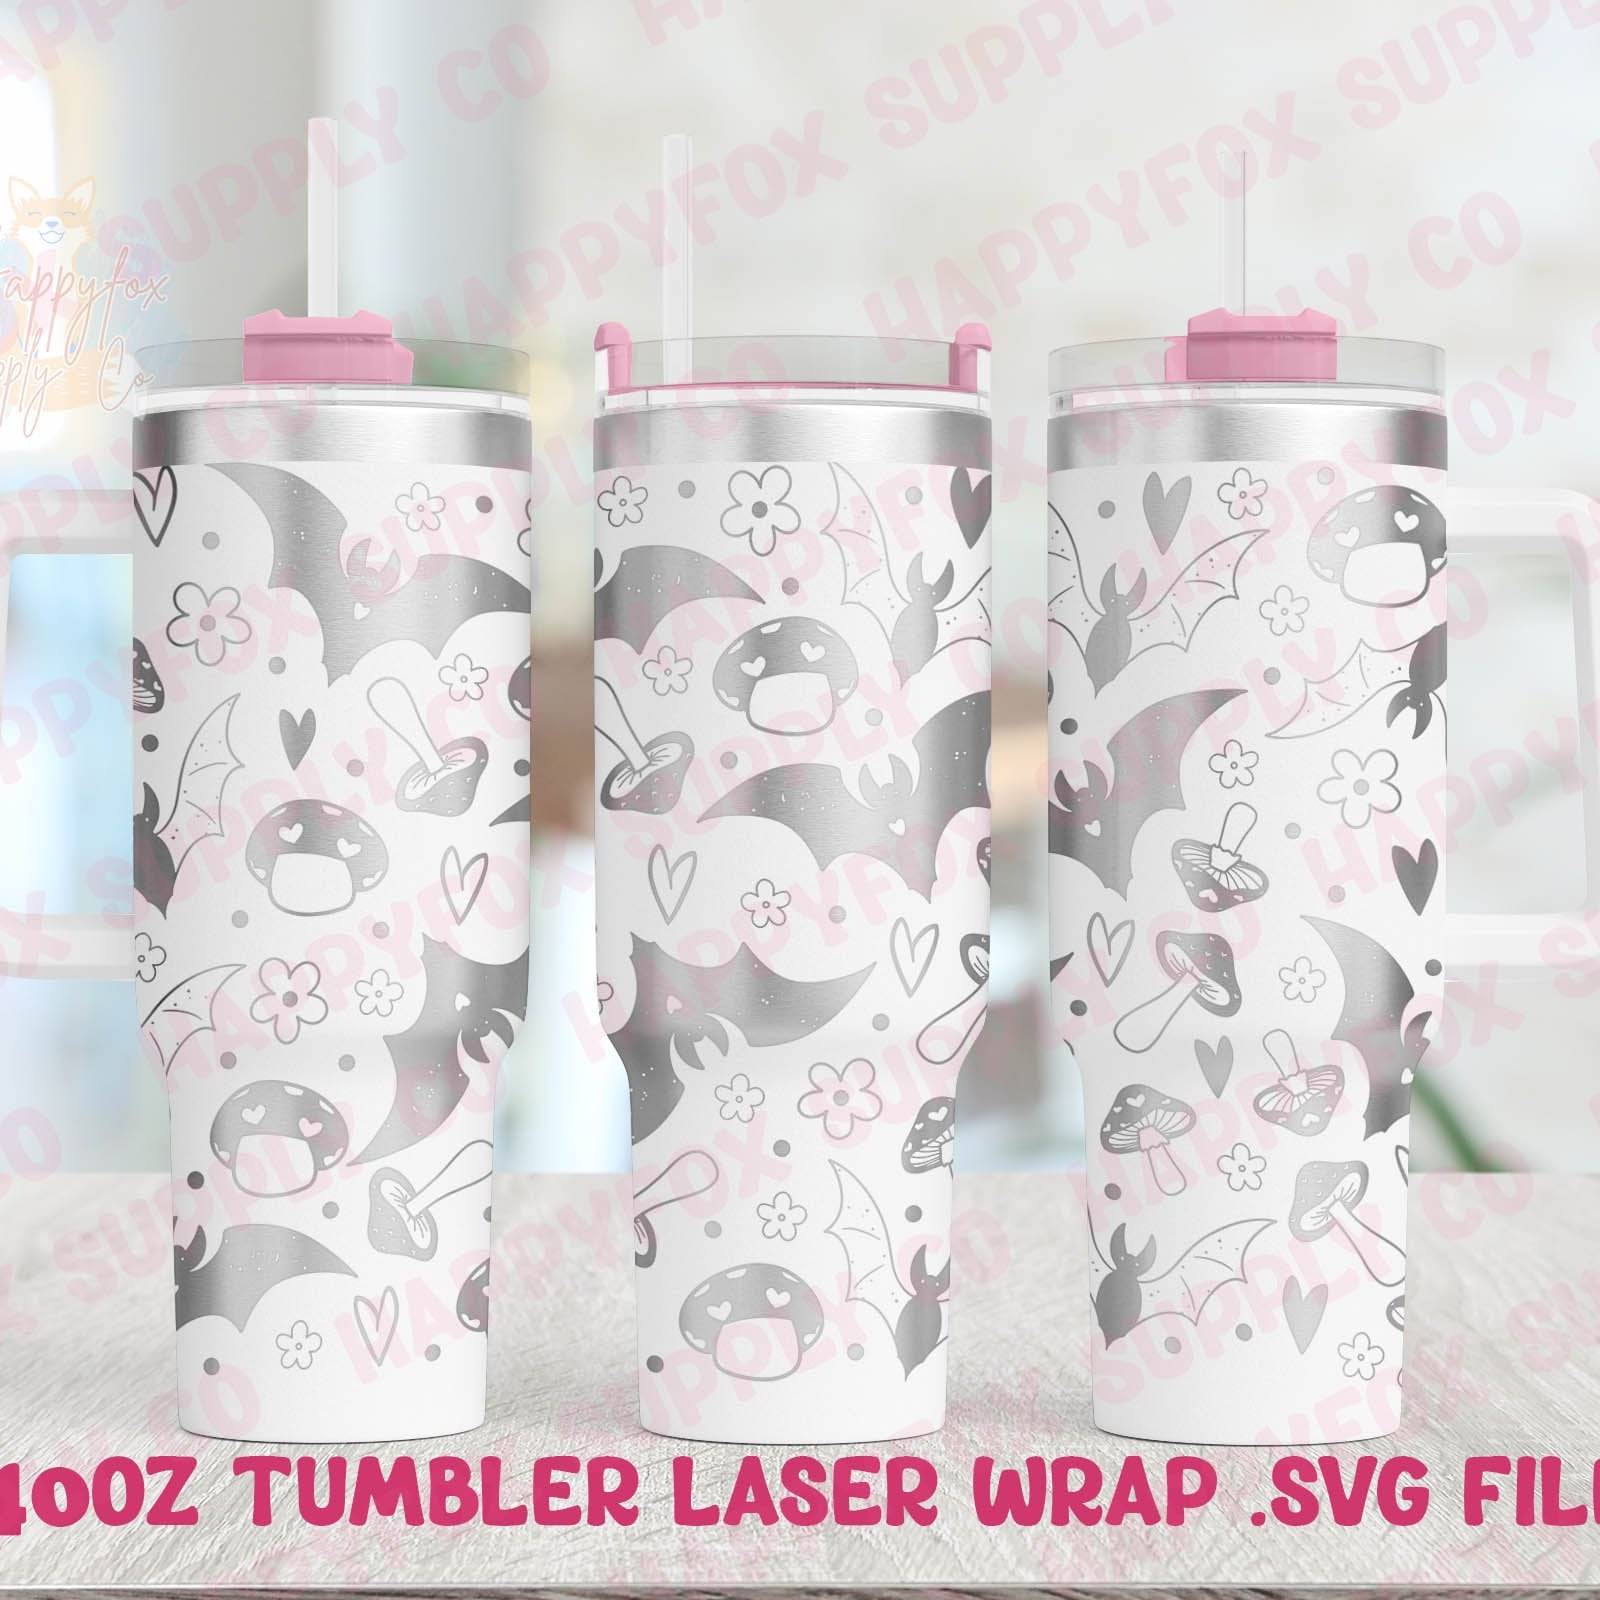 40oz Engraving .SVG File for Lasers Laser Engraved Tumbler Wrap Bats & Mushrooms Hearts Flowers Retro Spooky Cute .SVG Tumbler Wrap